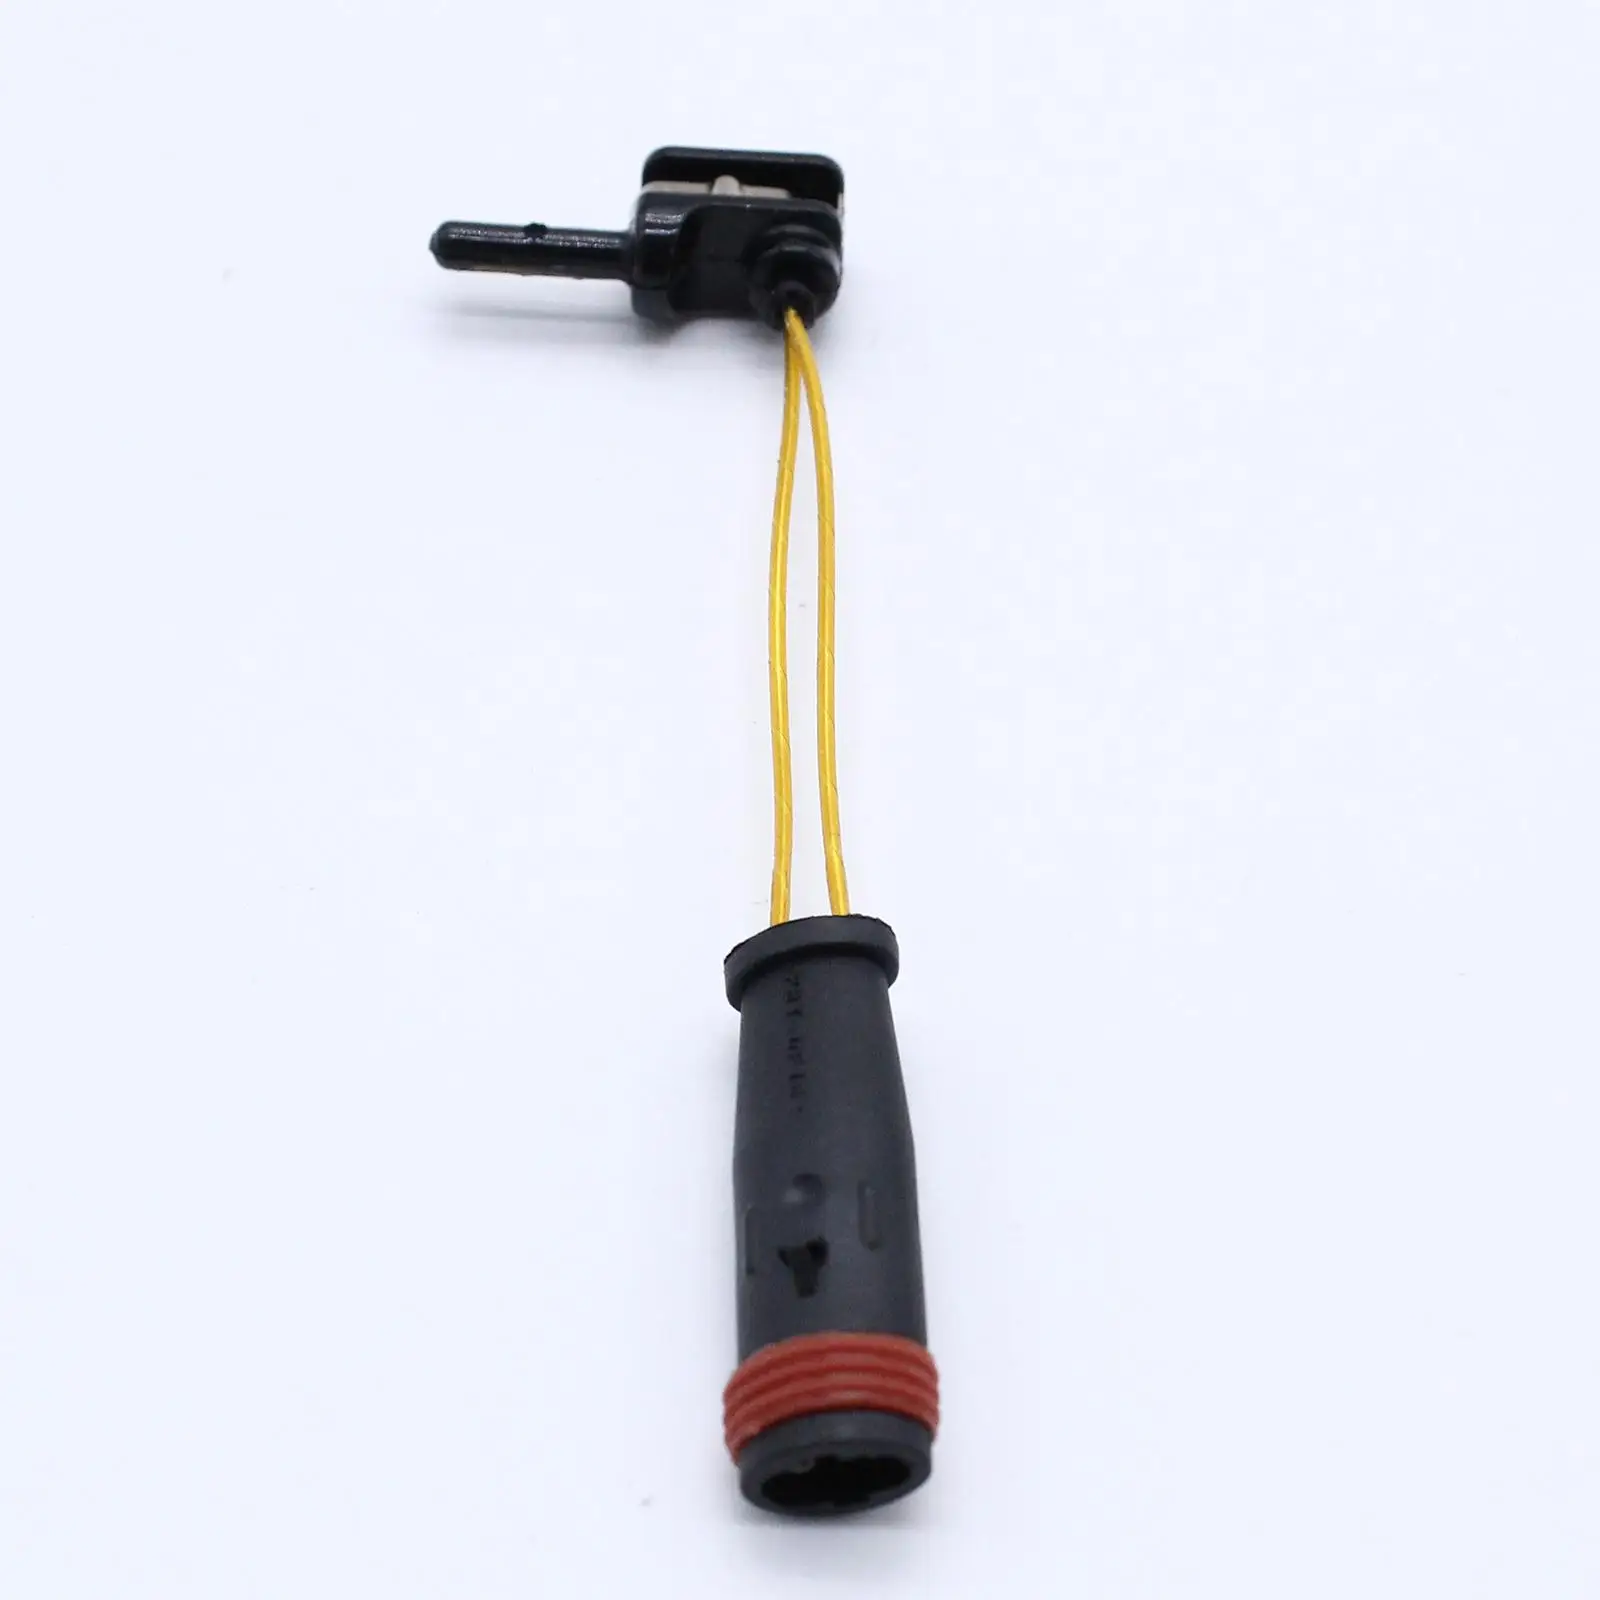 Automotive 2115401717 Brake Pad Wear Indicator Sensor for W203 W204 W211 CLK SL C E S Class Durable Replacement Premium